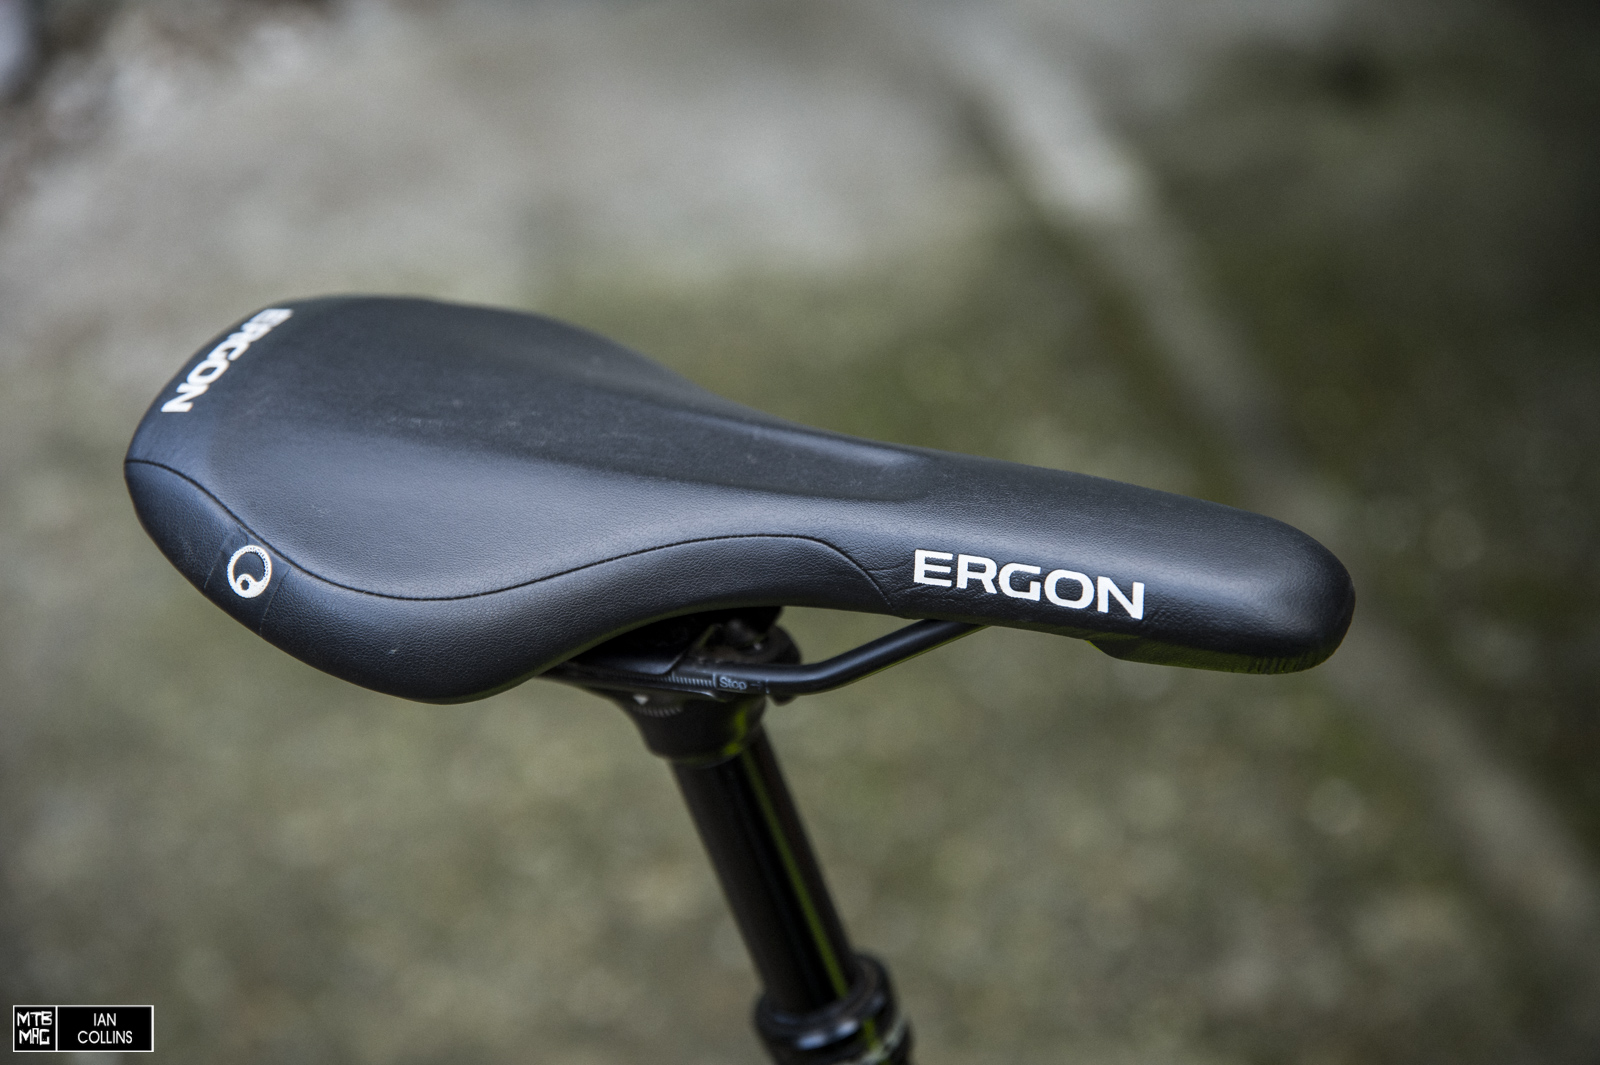 ergon mountain bike saddle